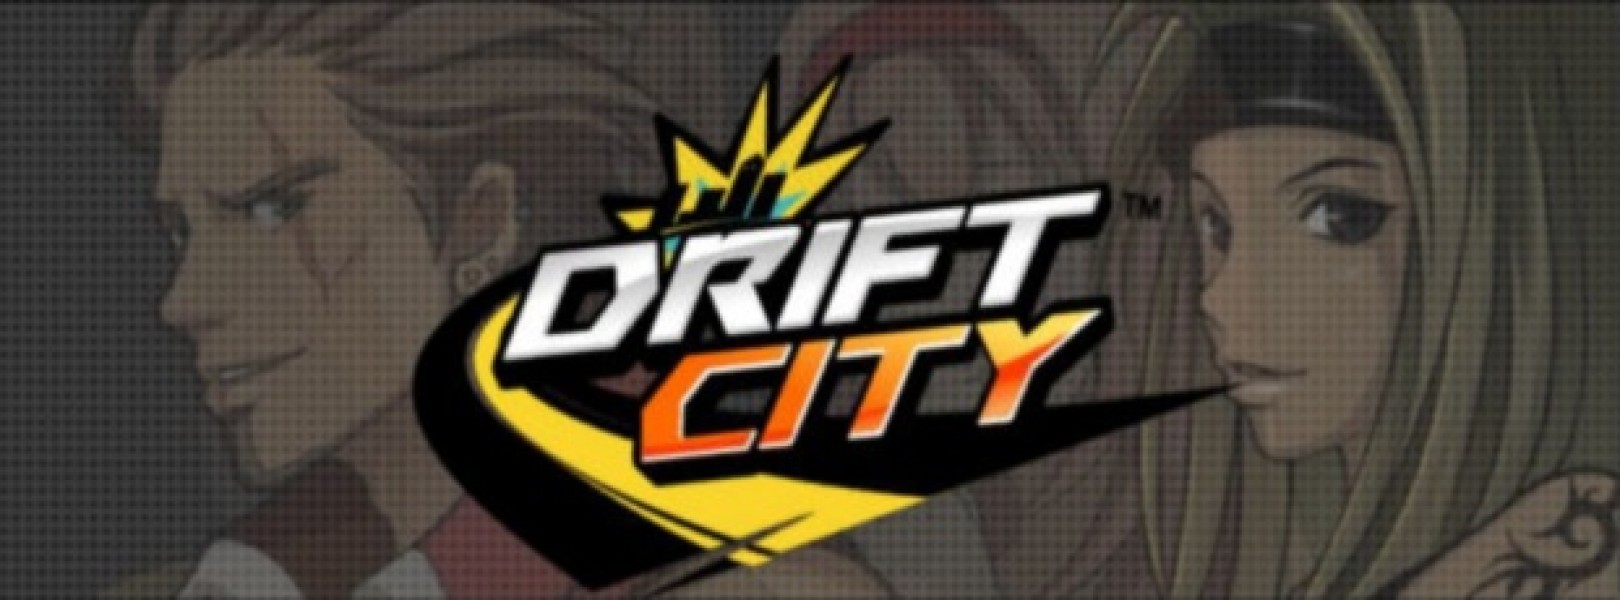 gamescampus drift city forums